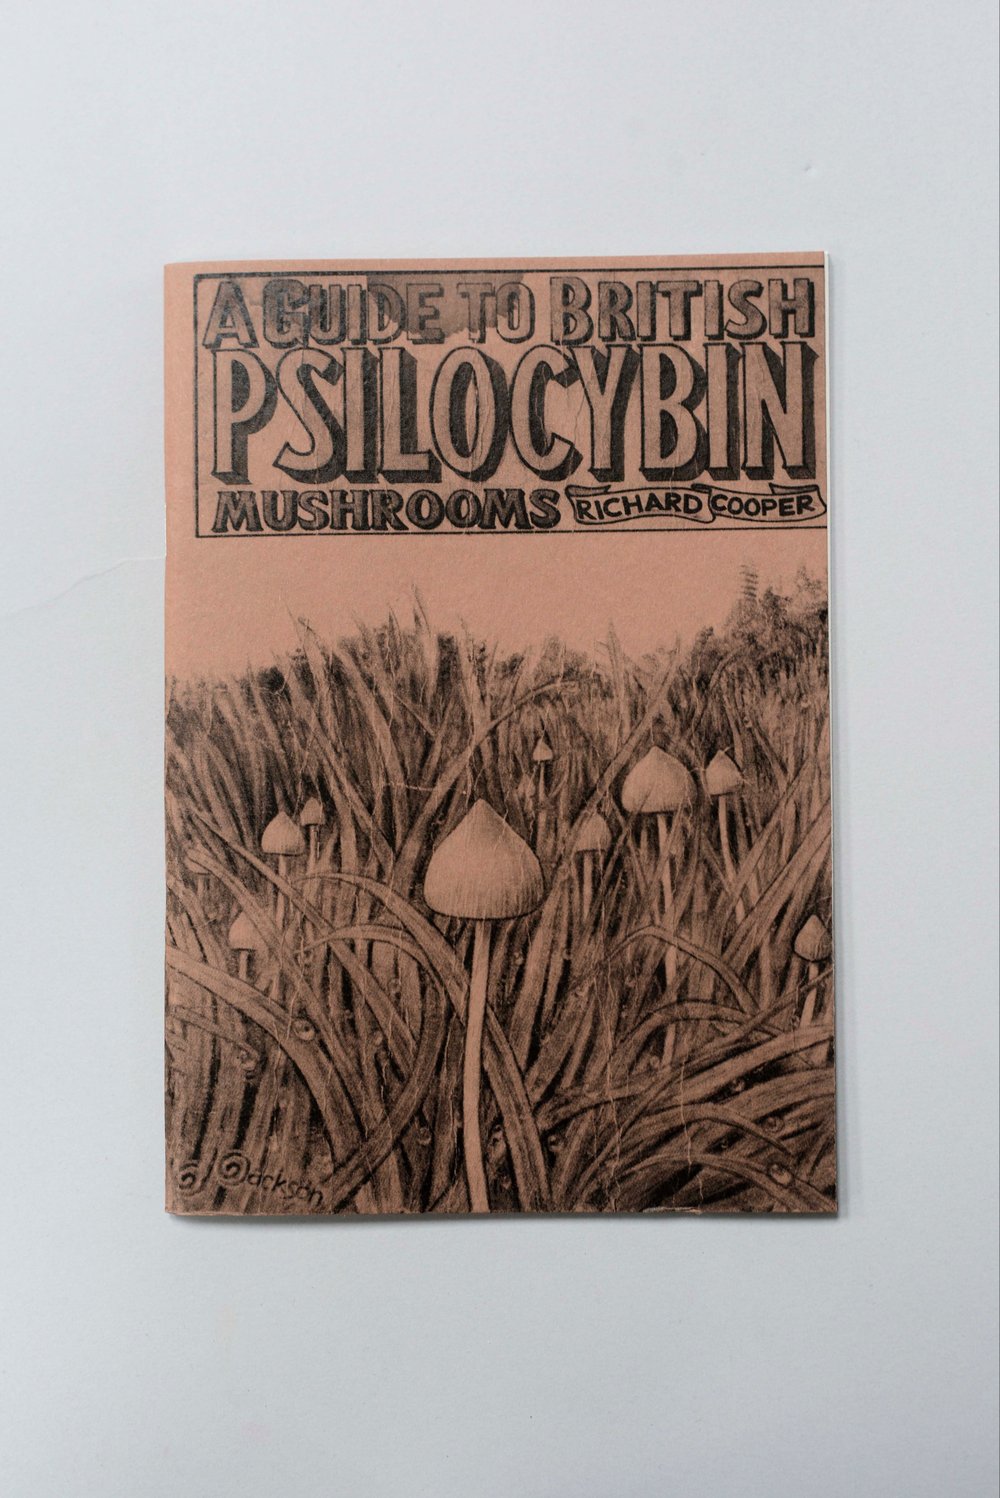 A guide to British psilocybin mushrooms 